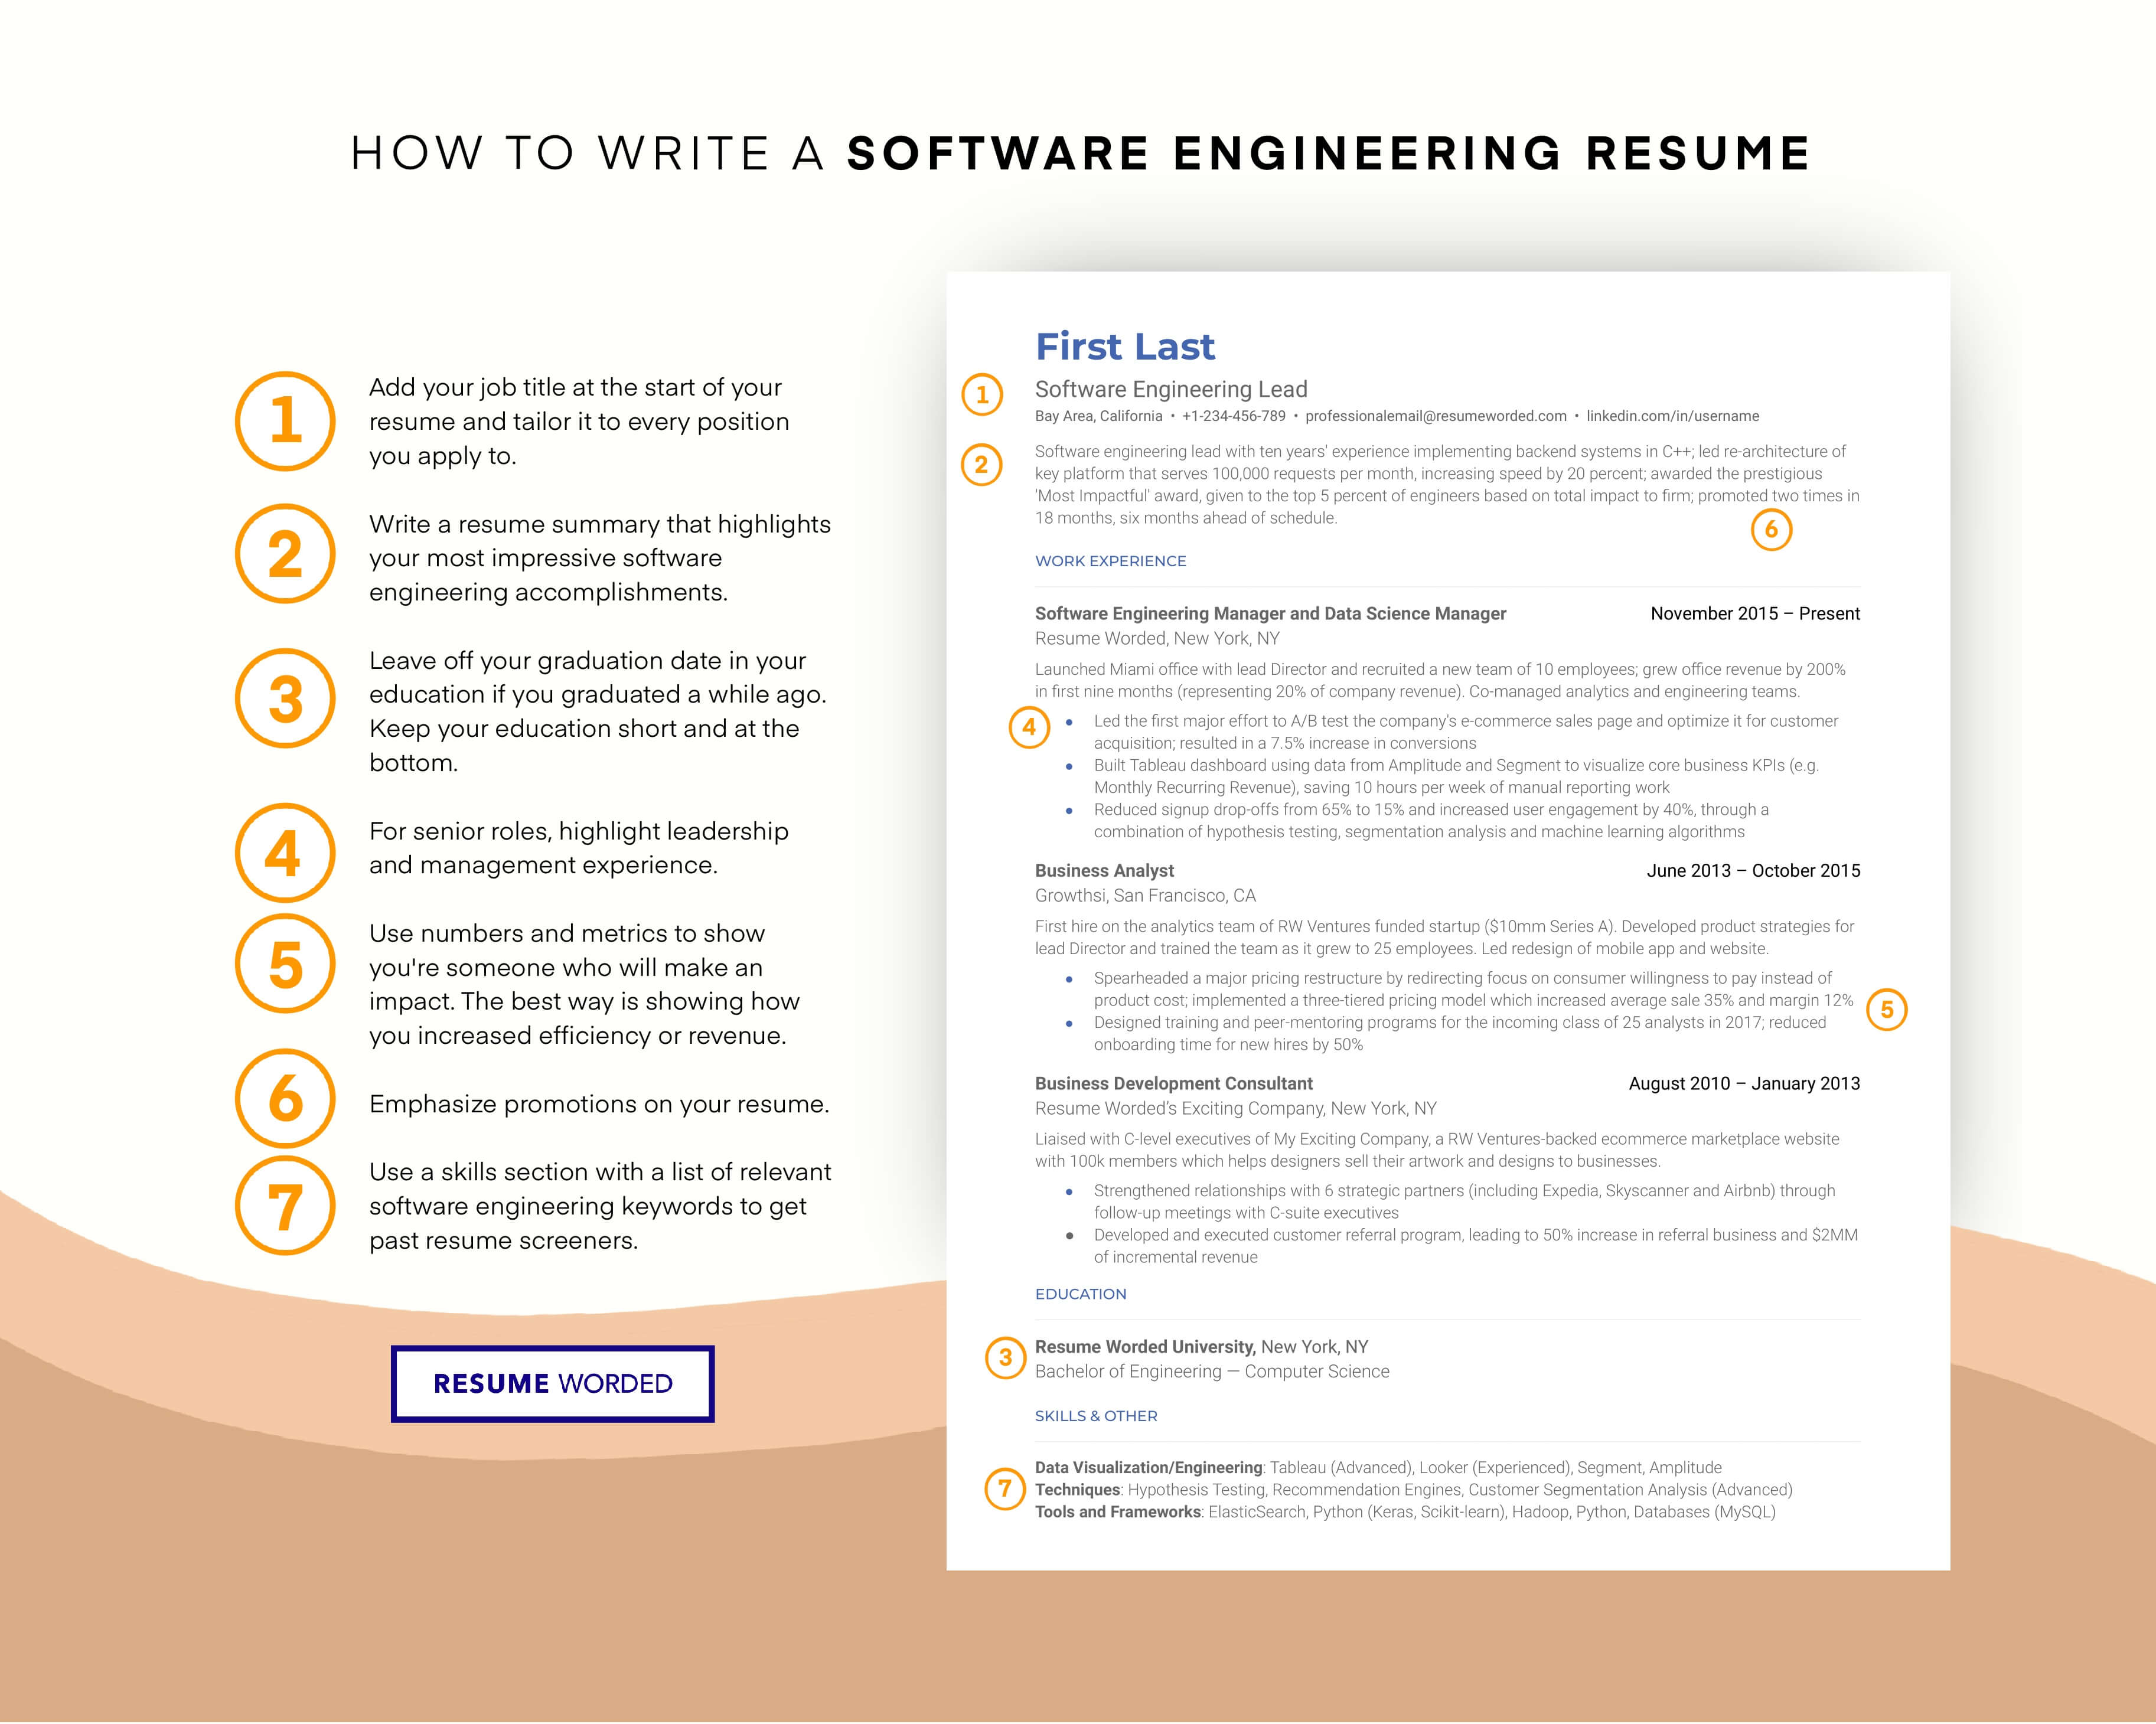 Showcase software proficiency - Data Entry Specialist Resume